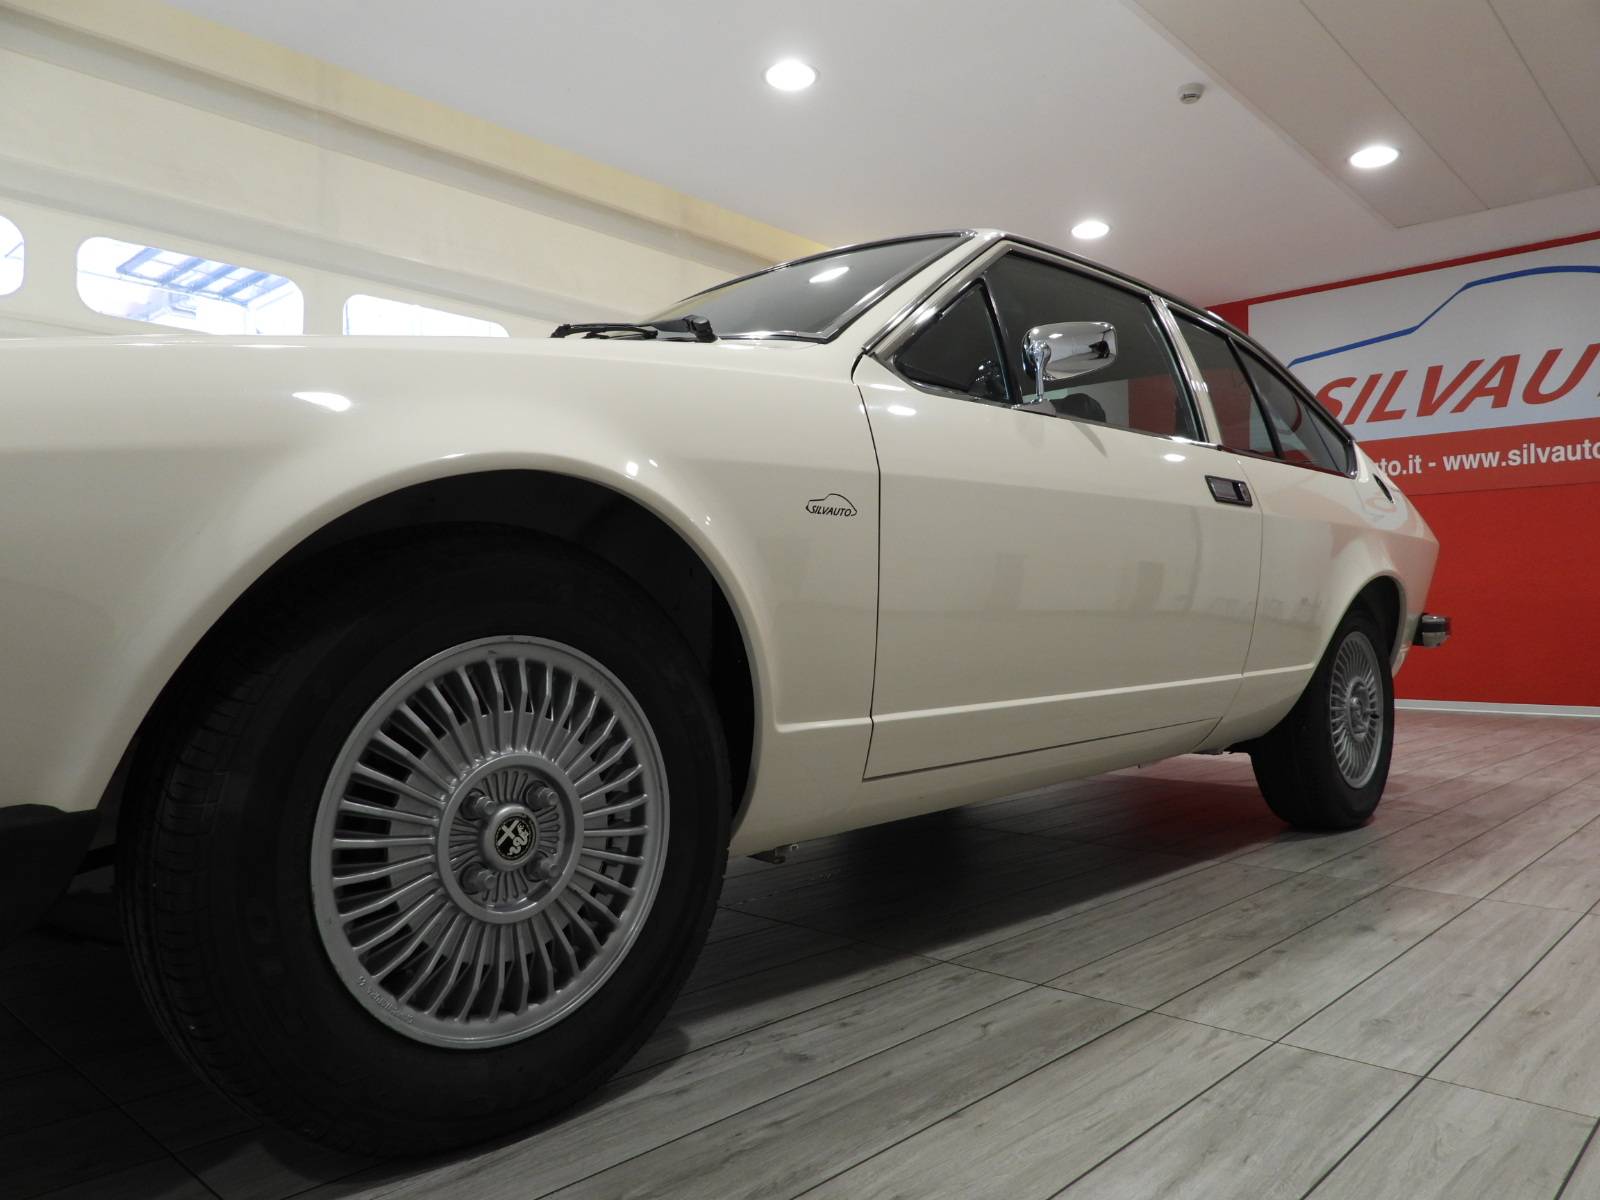 For Sale: Alfa Romeo Alfetta 1.6 (1979) offered for £15,087